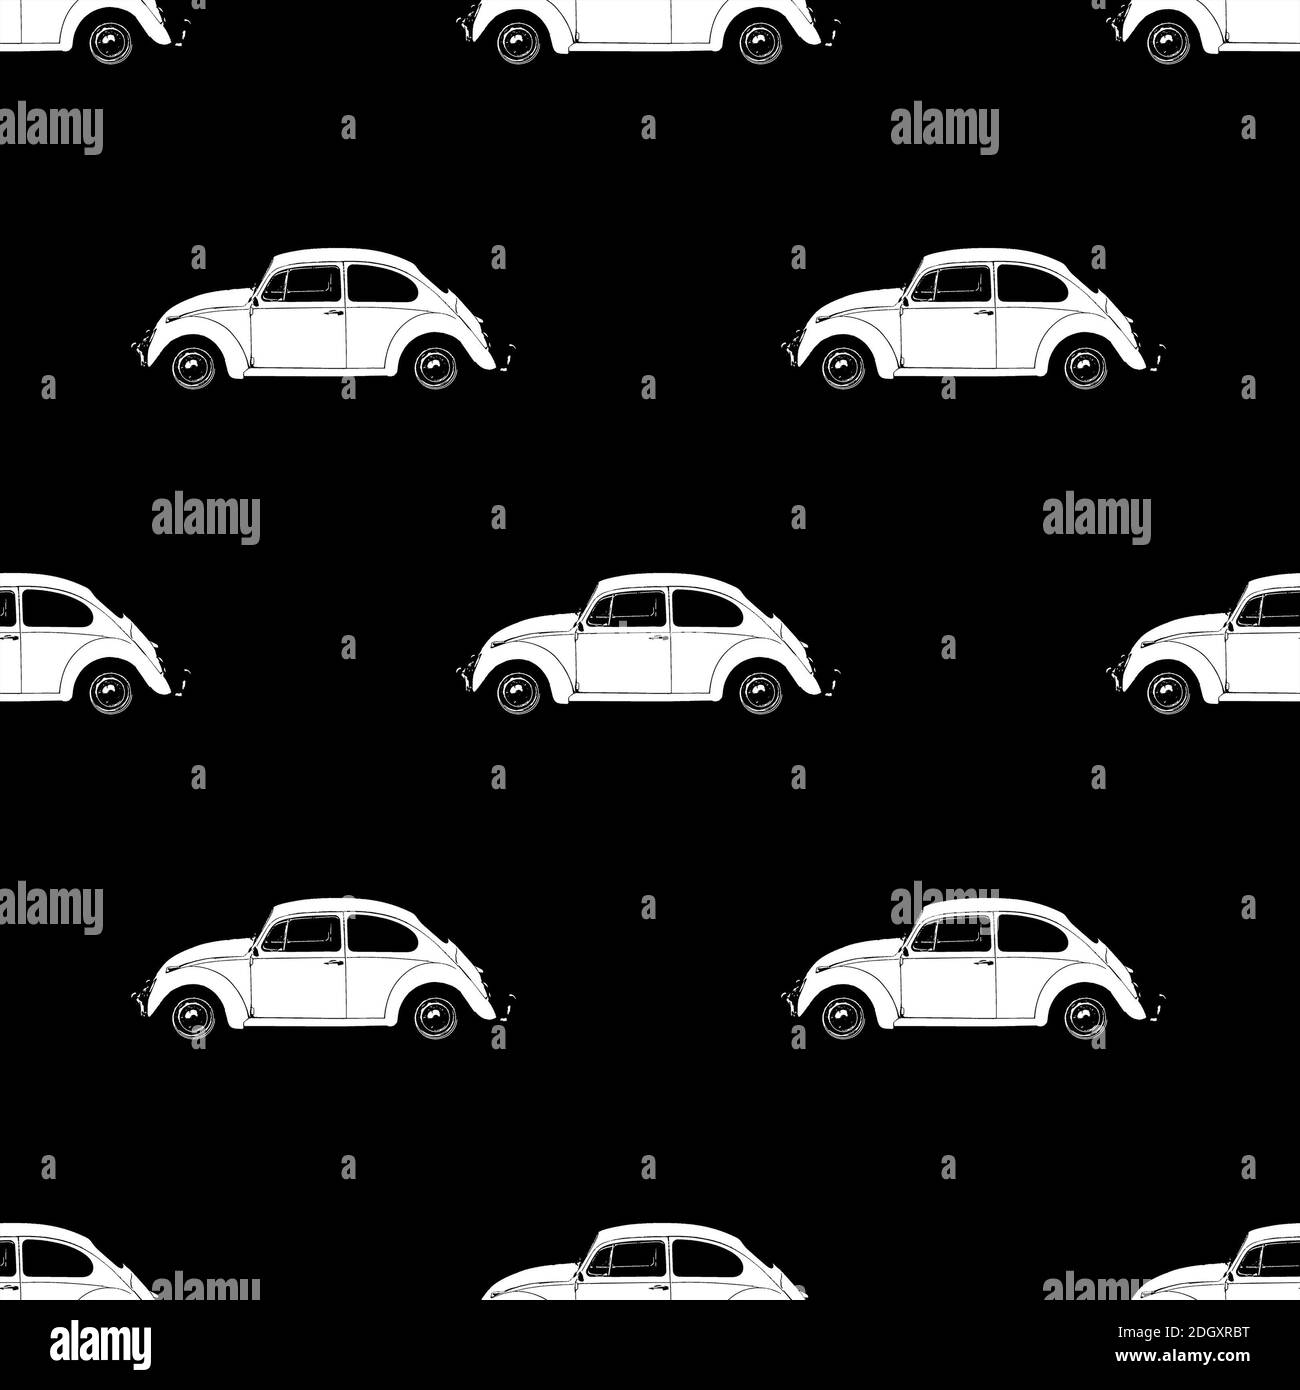 Beetle Car Motif Graphic Seamless Pattern Stock Photo